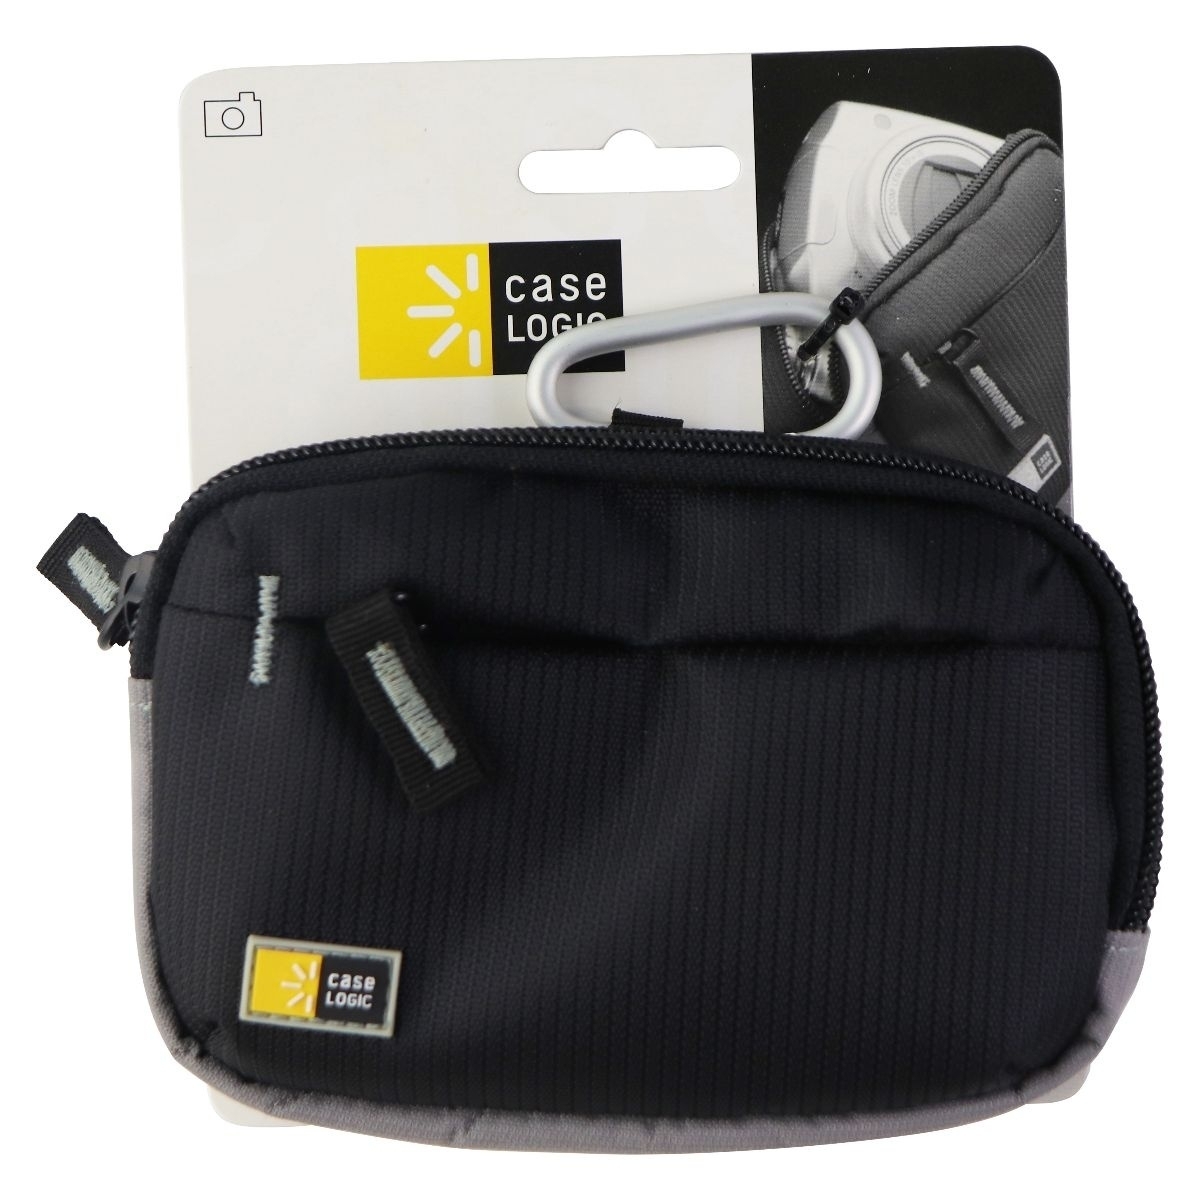 Case Logic TBC-303 Medium Camera/Camcorder Case - Black And Gray